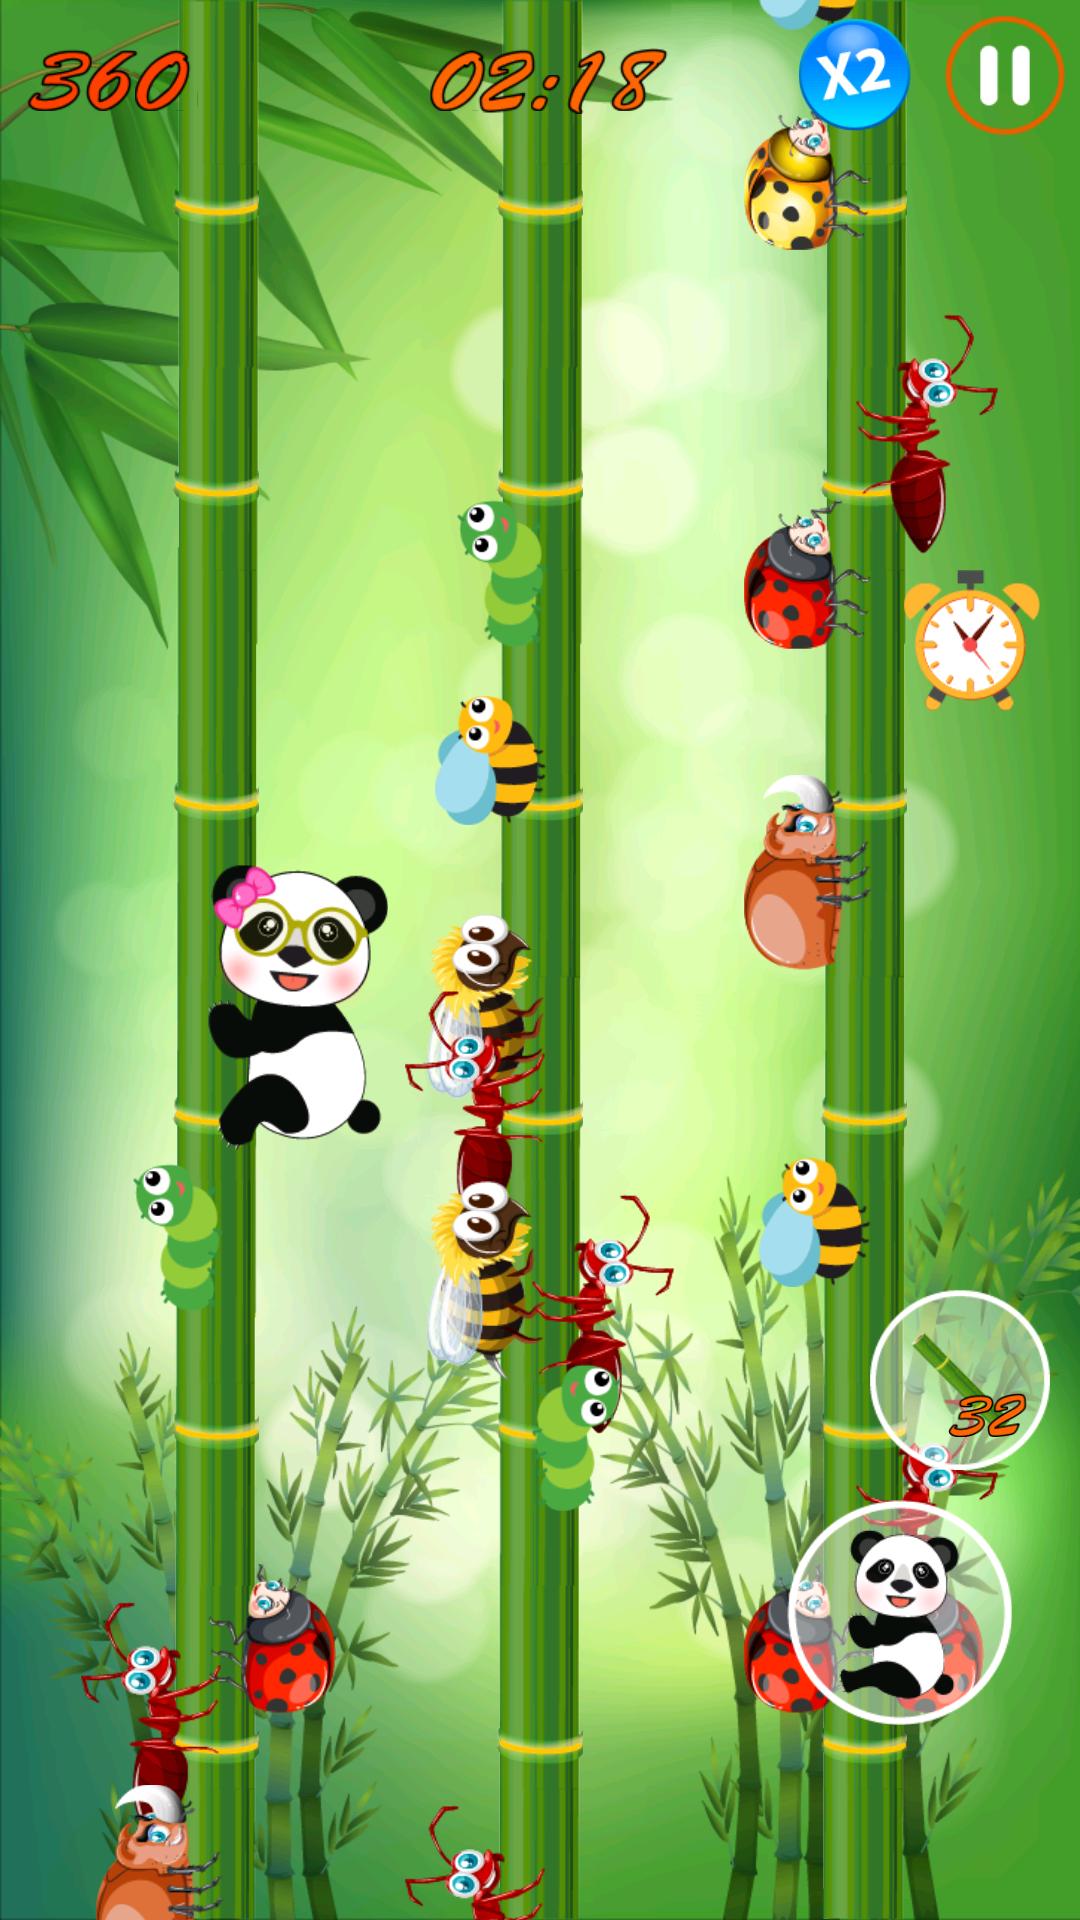 mobile] [1990-2010] platform panda game : r/tipofmyjoystick